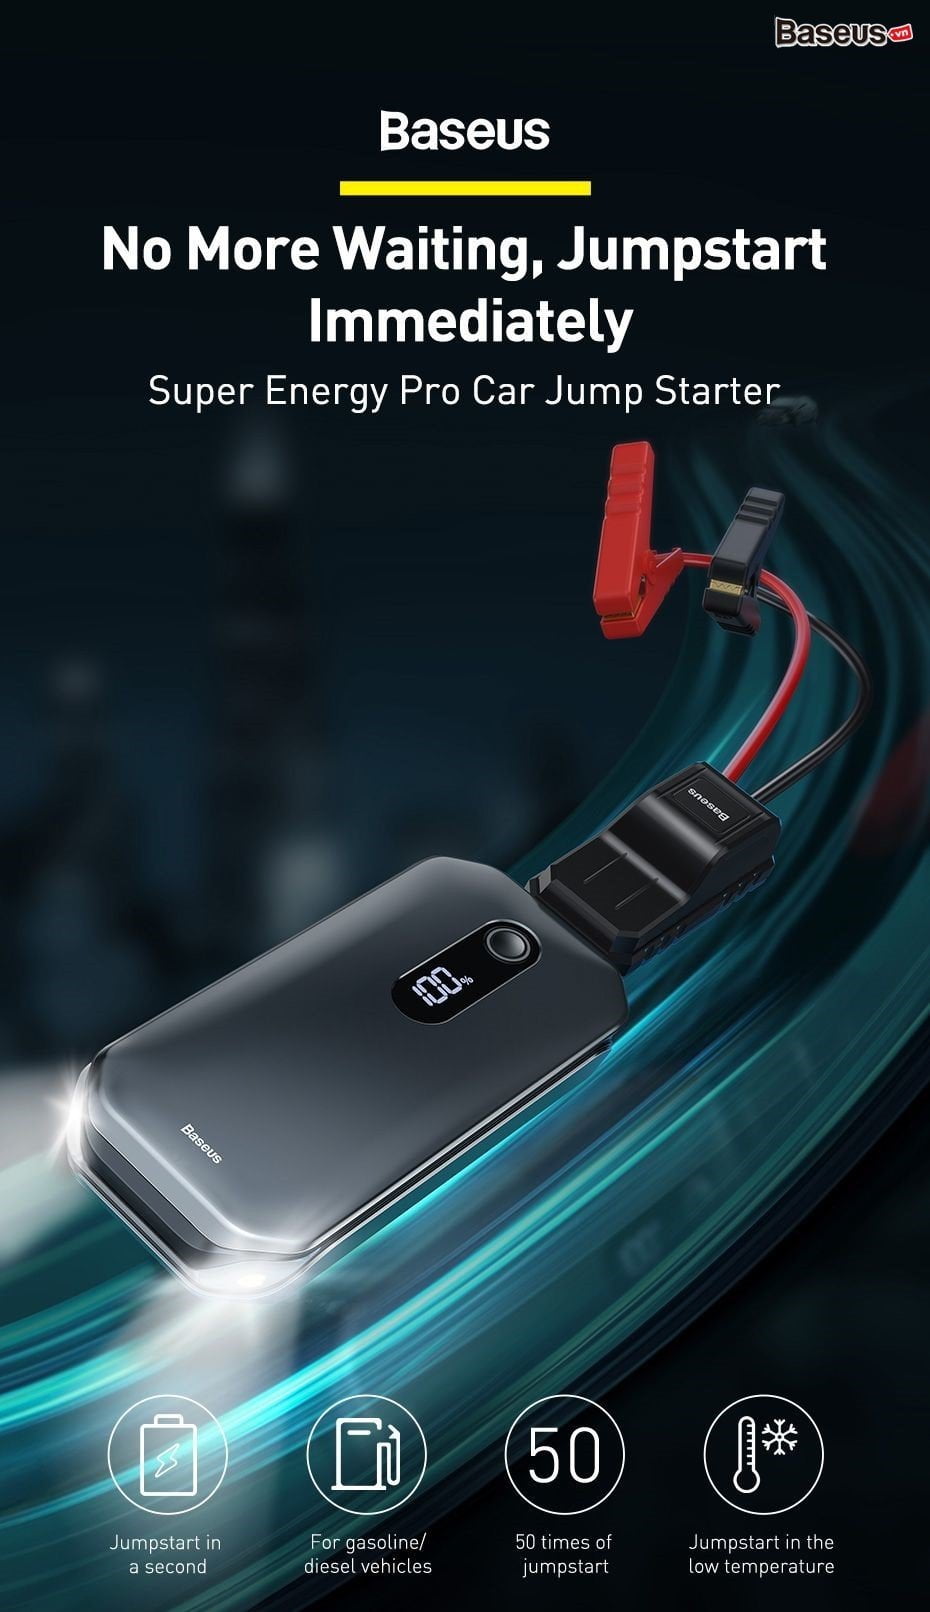 super energy pro car jump starter 01 14b94025e70e4013a637277a9fc695d1